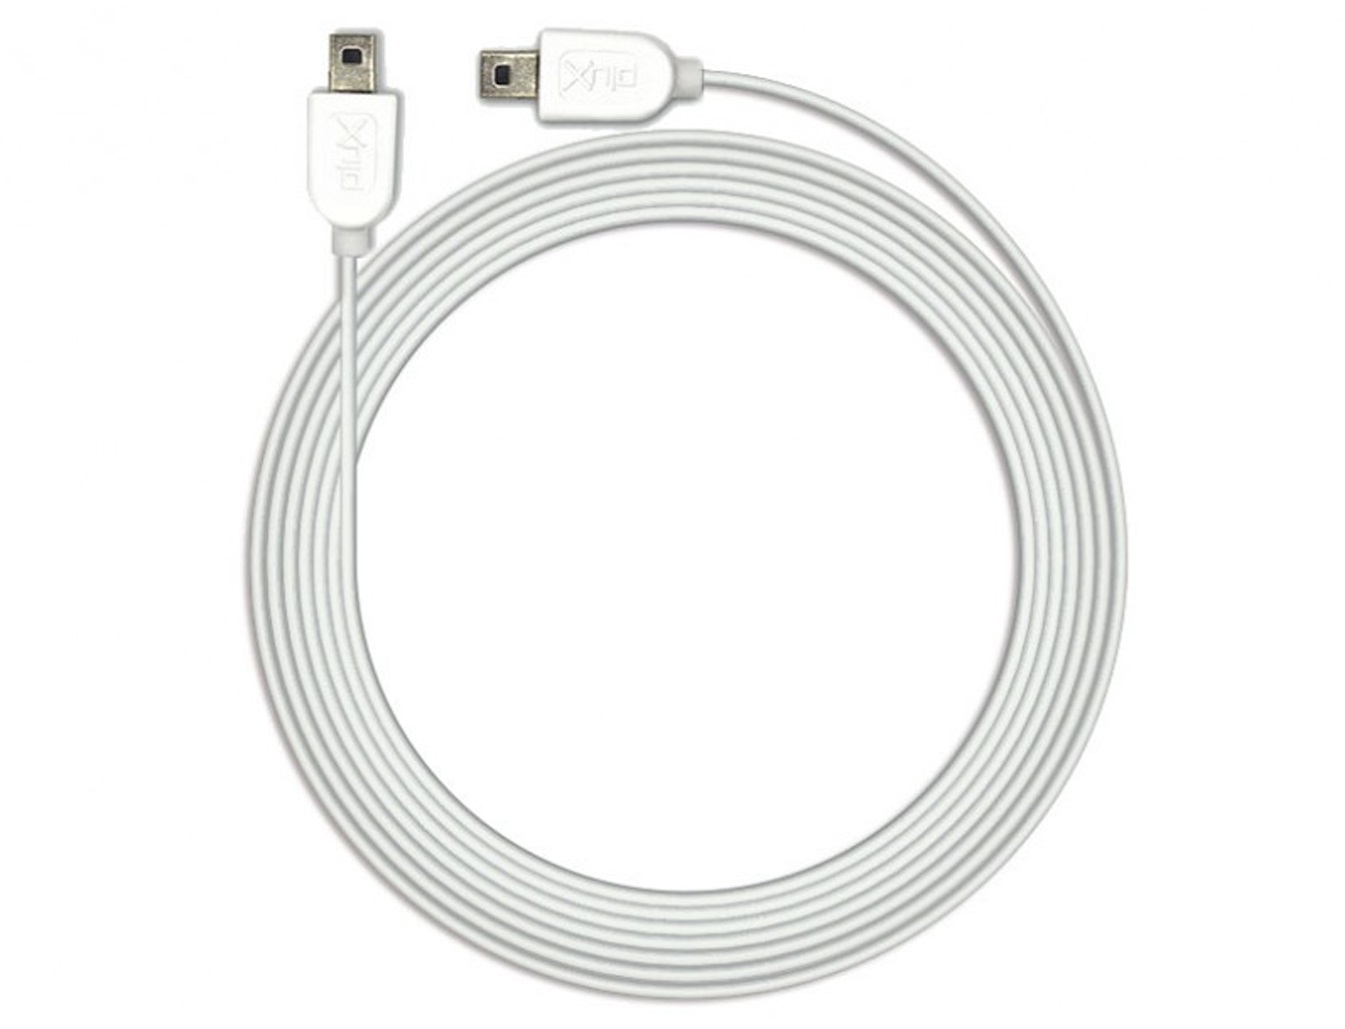 Bitalino Sensor Cable (100 cm)- Click to Enlarge